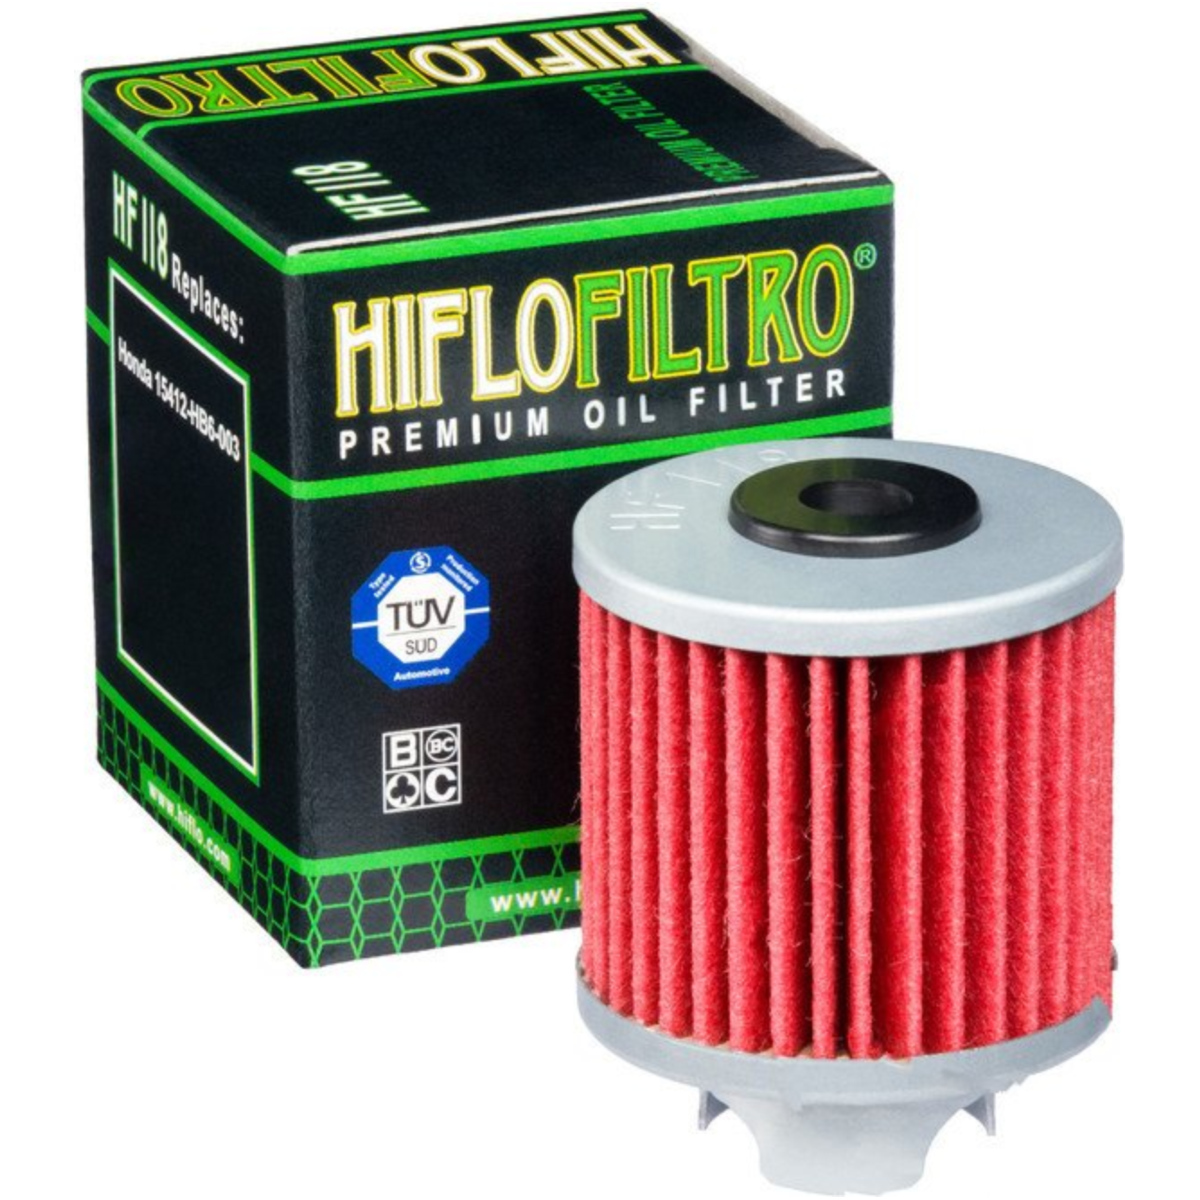 Hiflo hf118 Ölfilter von Hiflo